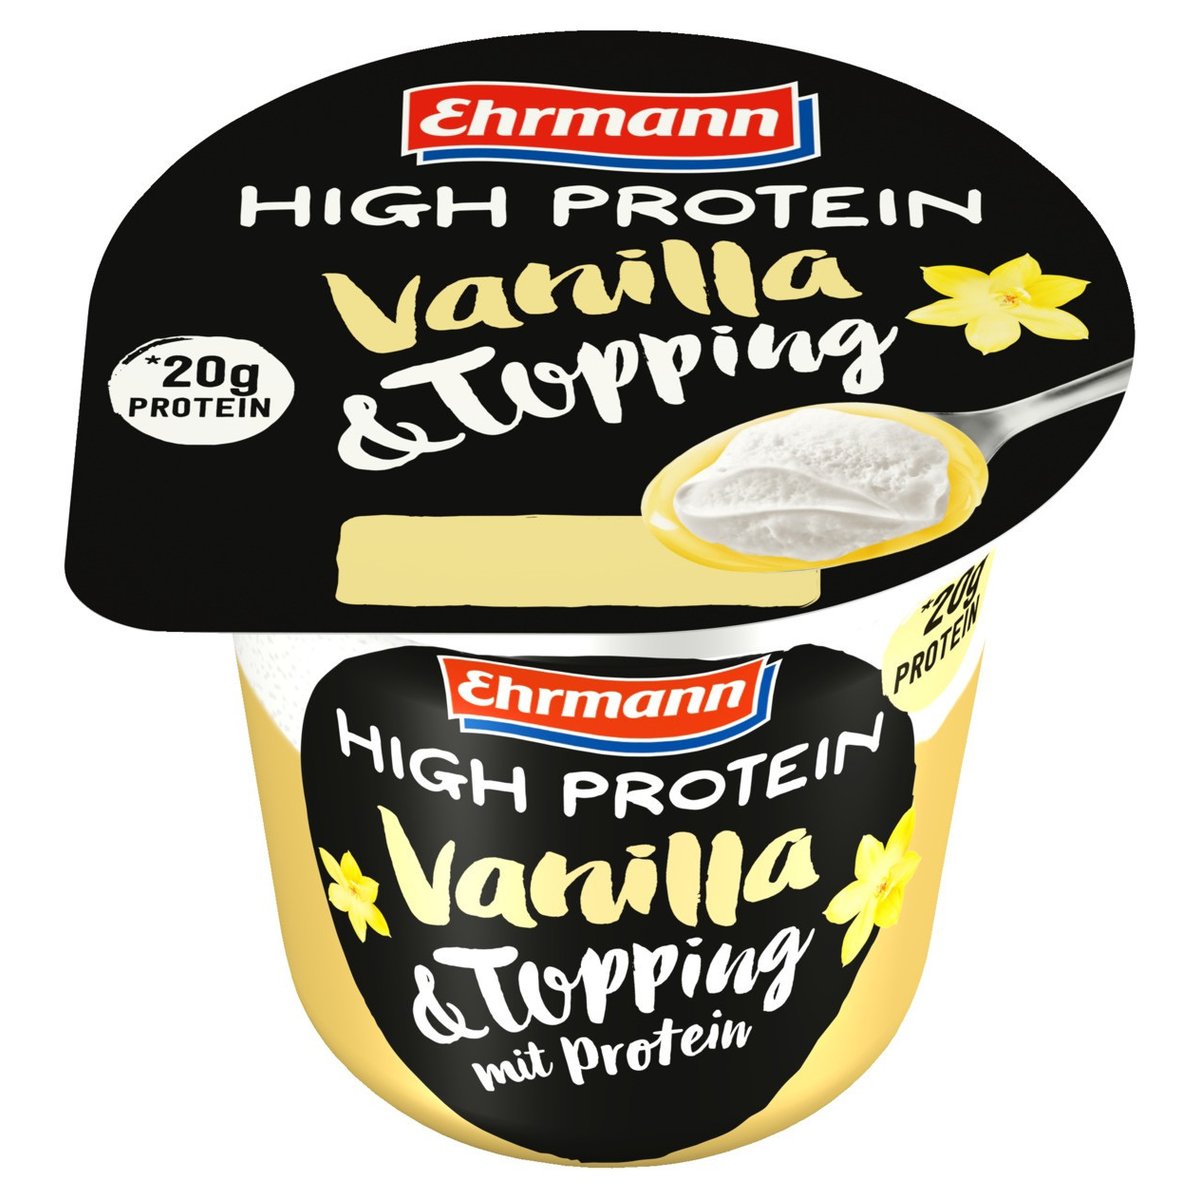 Ehrmann High Protein pudding s toppingem vanilka